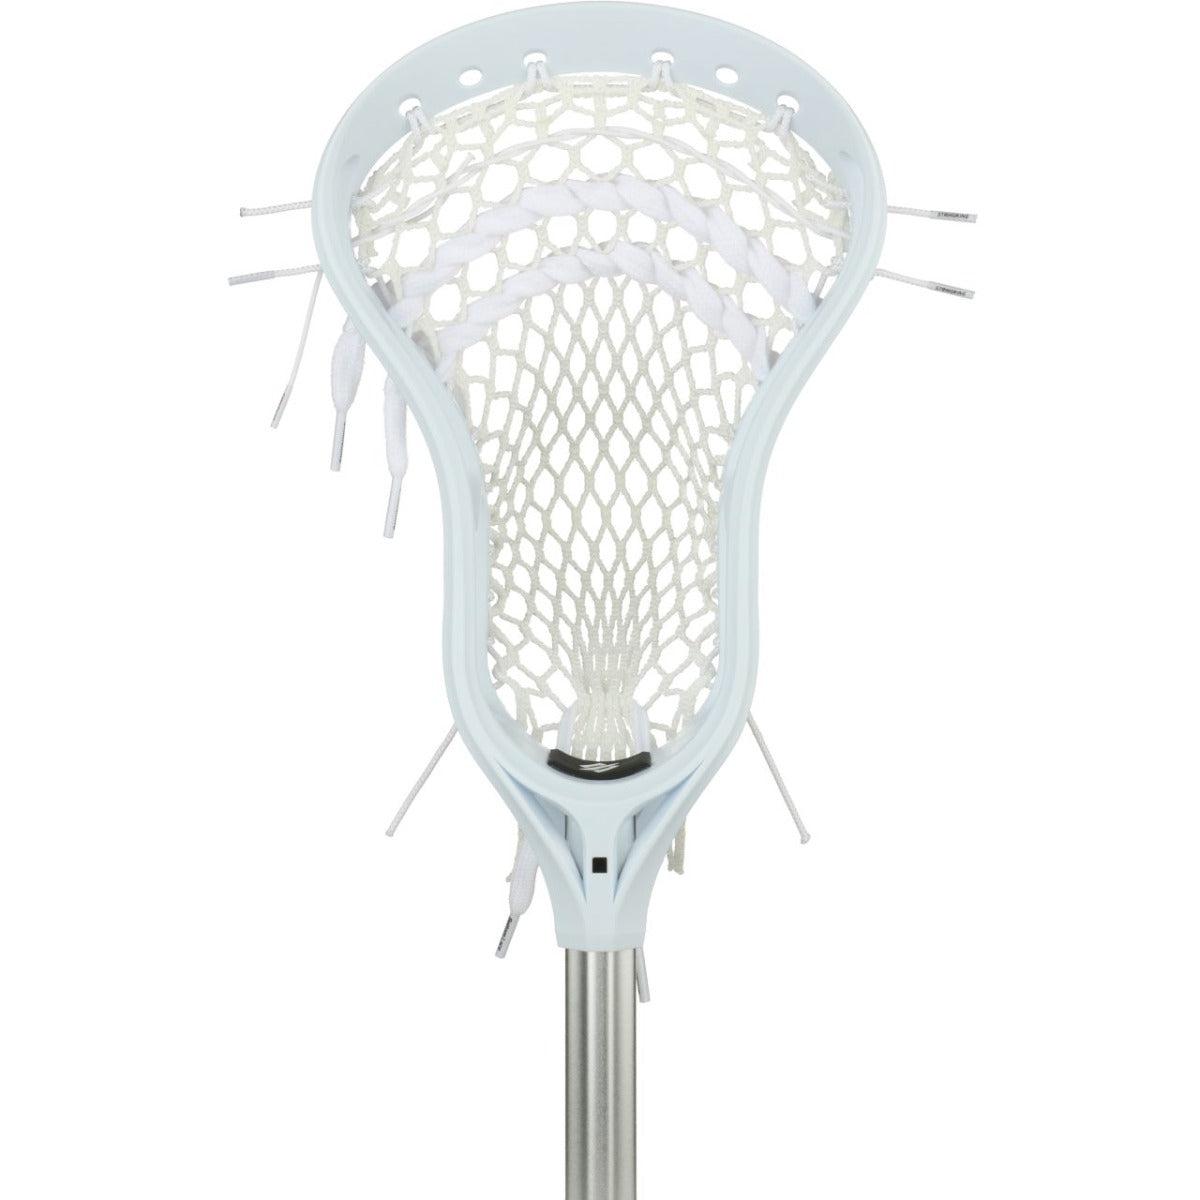 Stringking Complete 2 Senior Lacrosse Stick-Universal Lacrosse